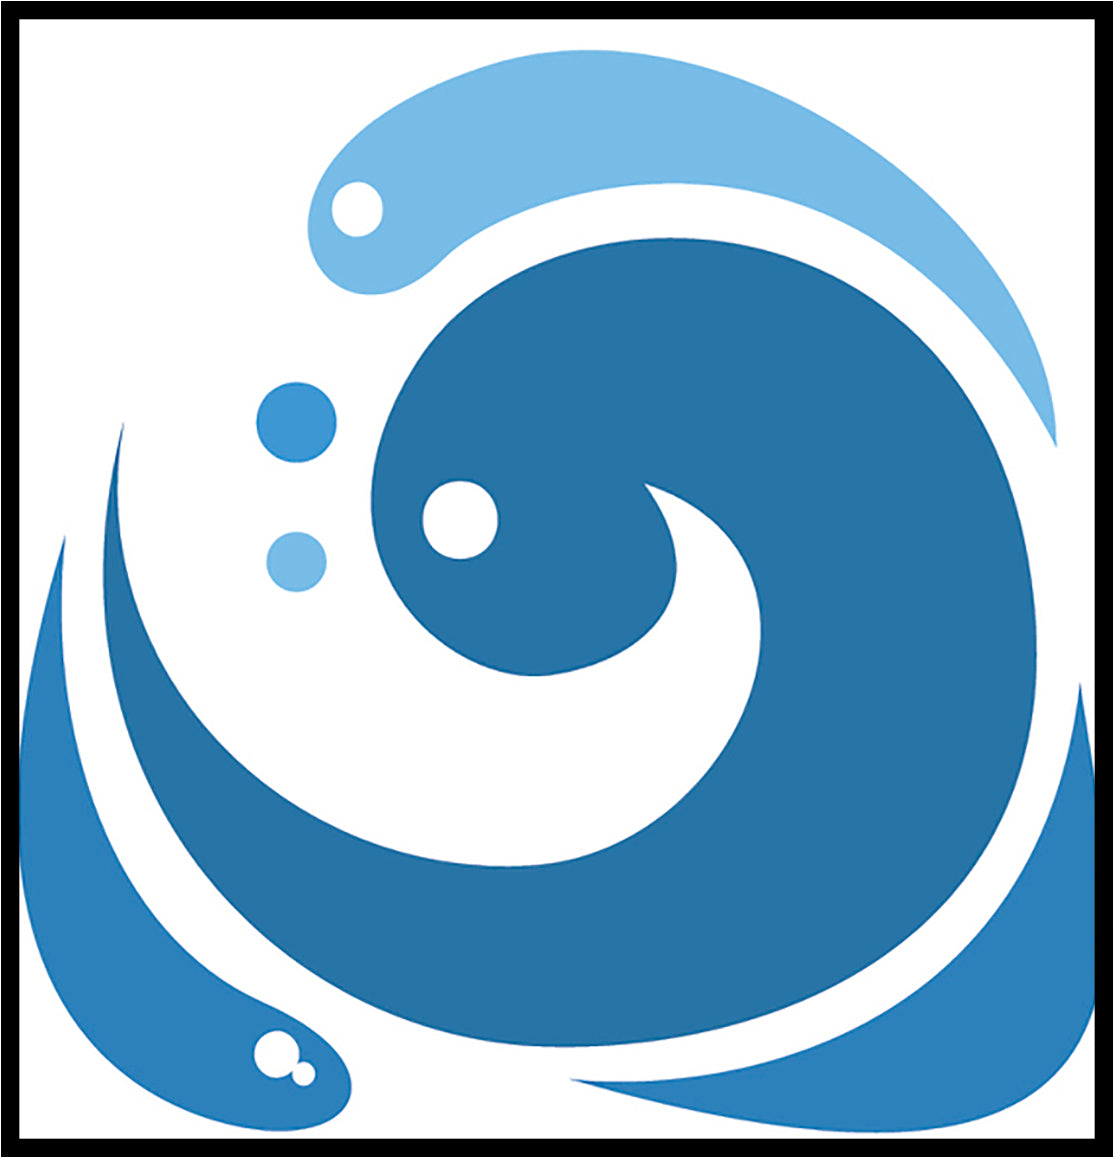 Cool Simple Ocean Sea Waves Cartoon Logo Icon #15 Border Around Image As Shown Vinyl Sticker